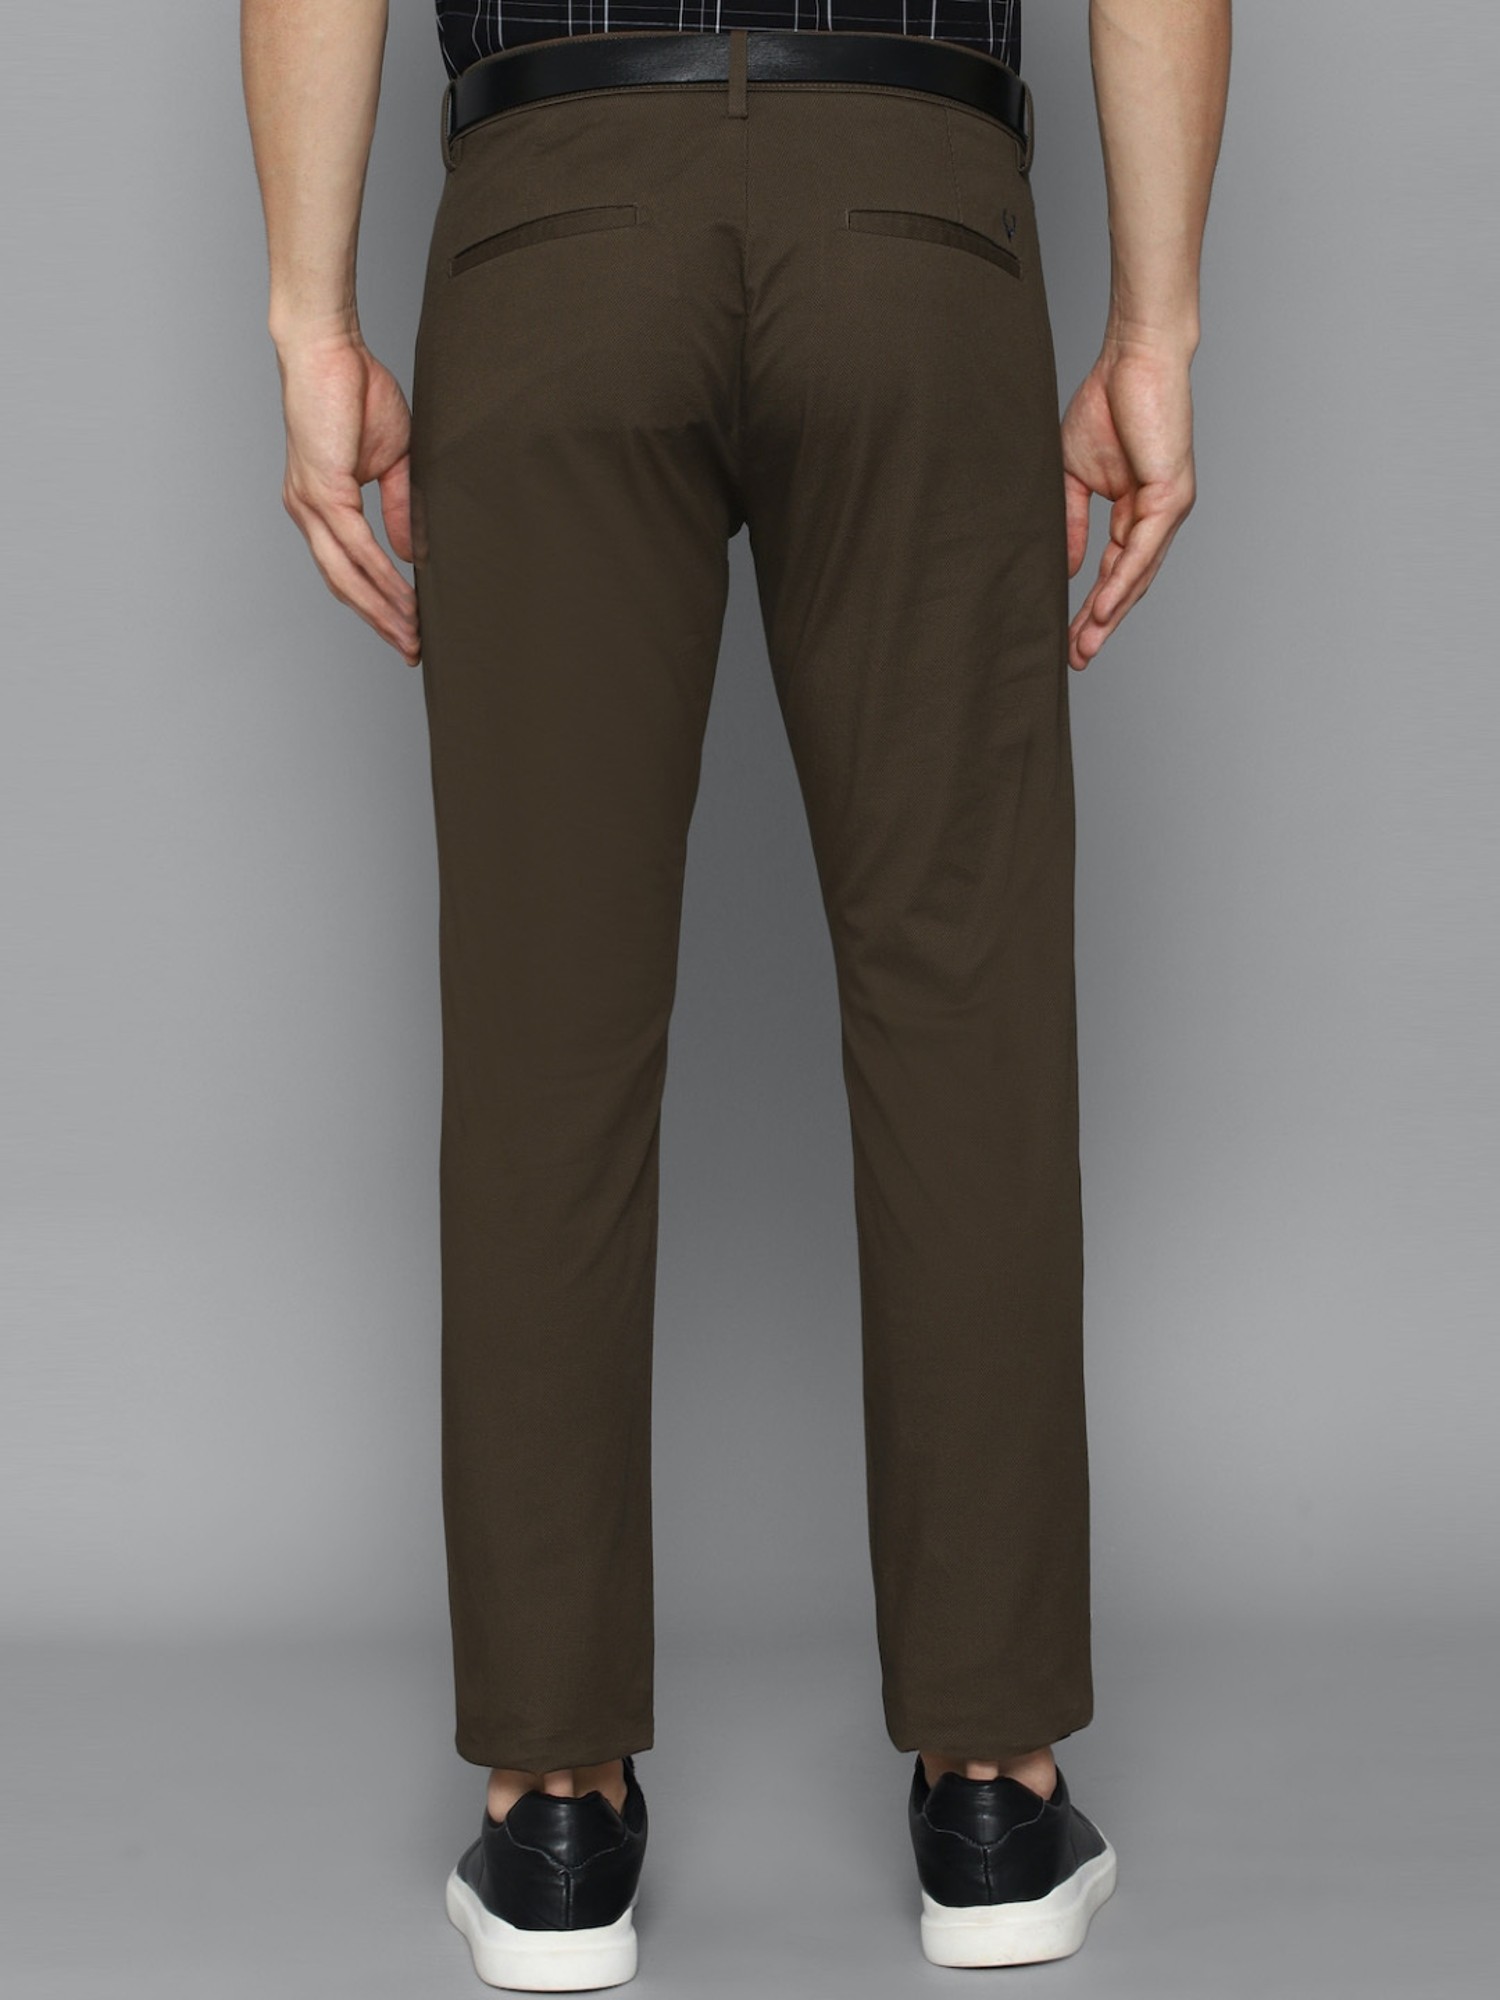 Buy Men Khaki Regular Fit Solid Casual Trousers Online  753086  Allen  Solly